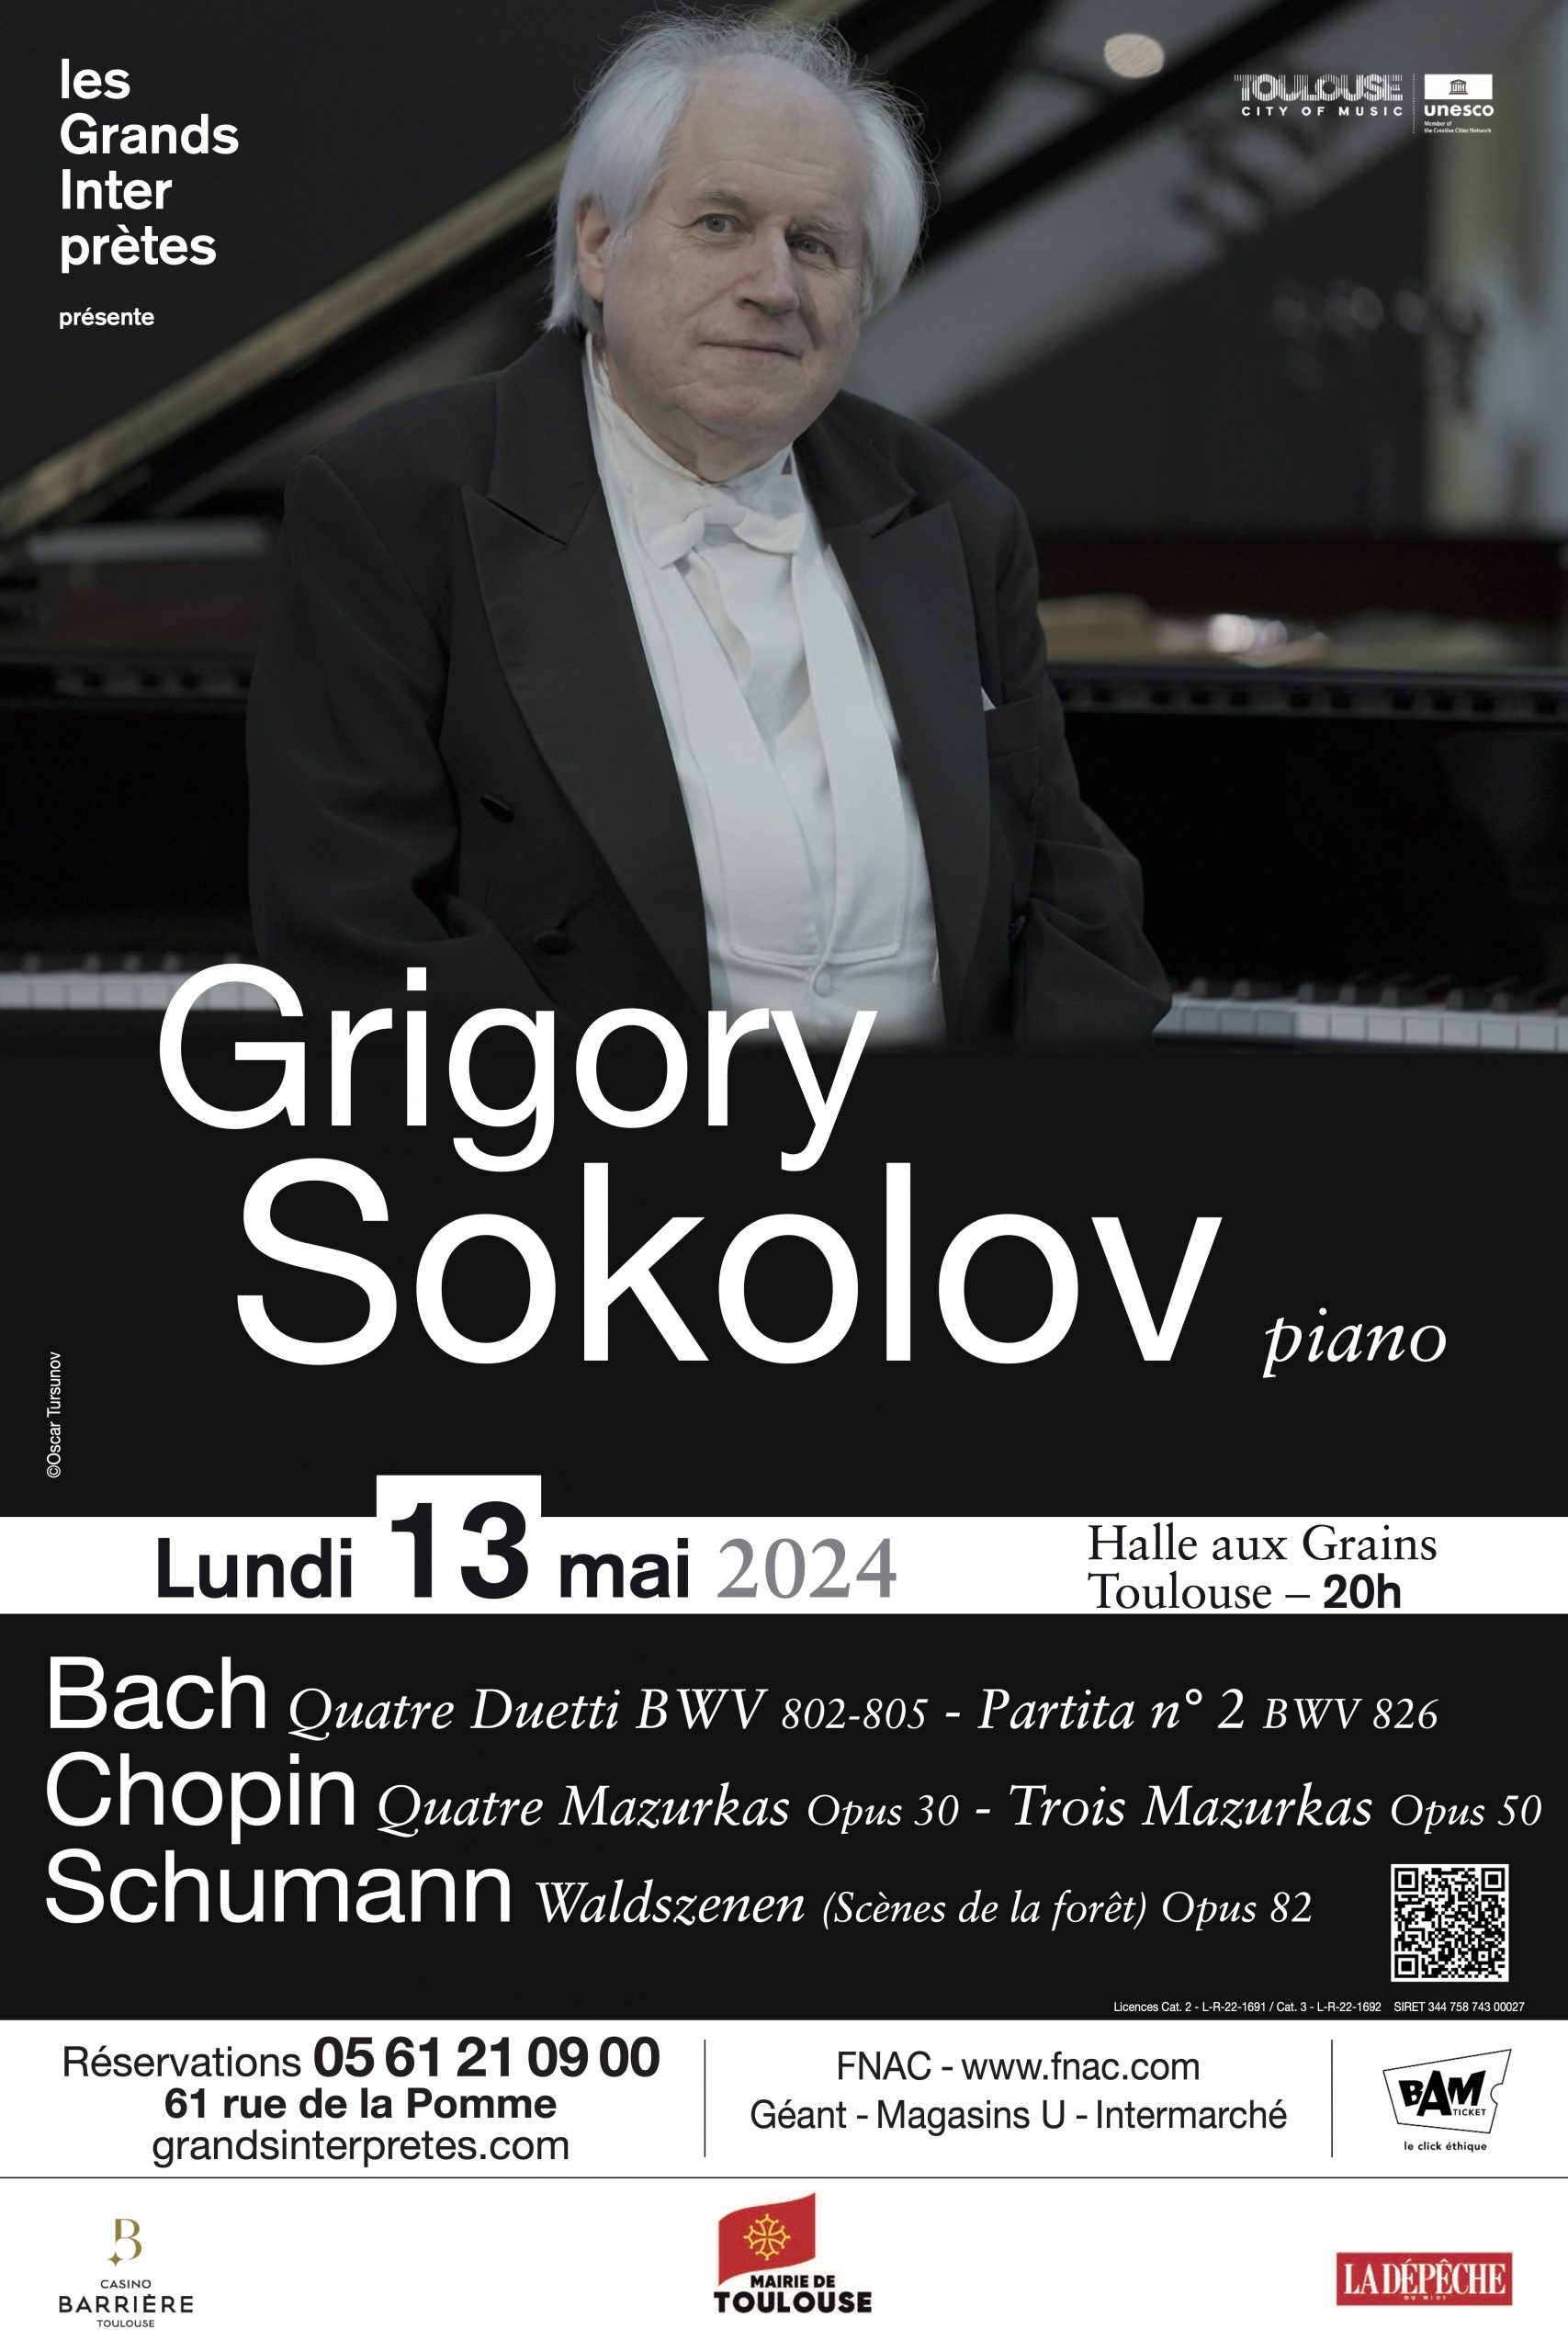 Les Grands Interprètes Grigory Sokolov